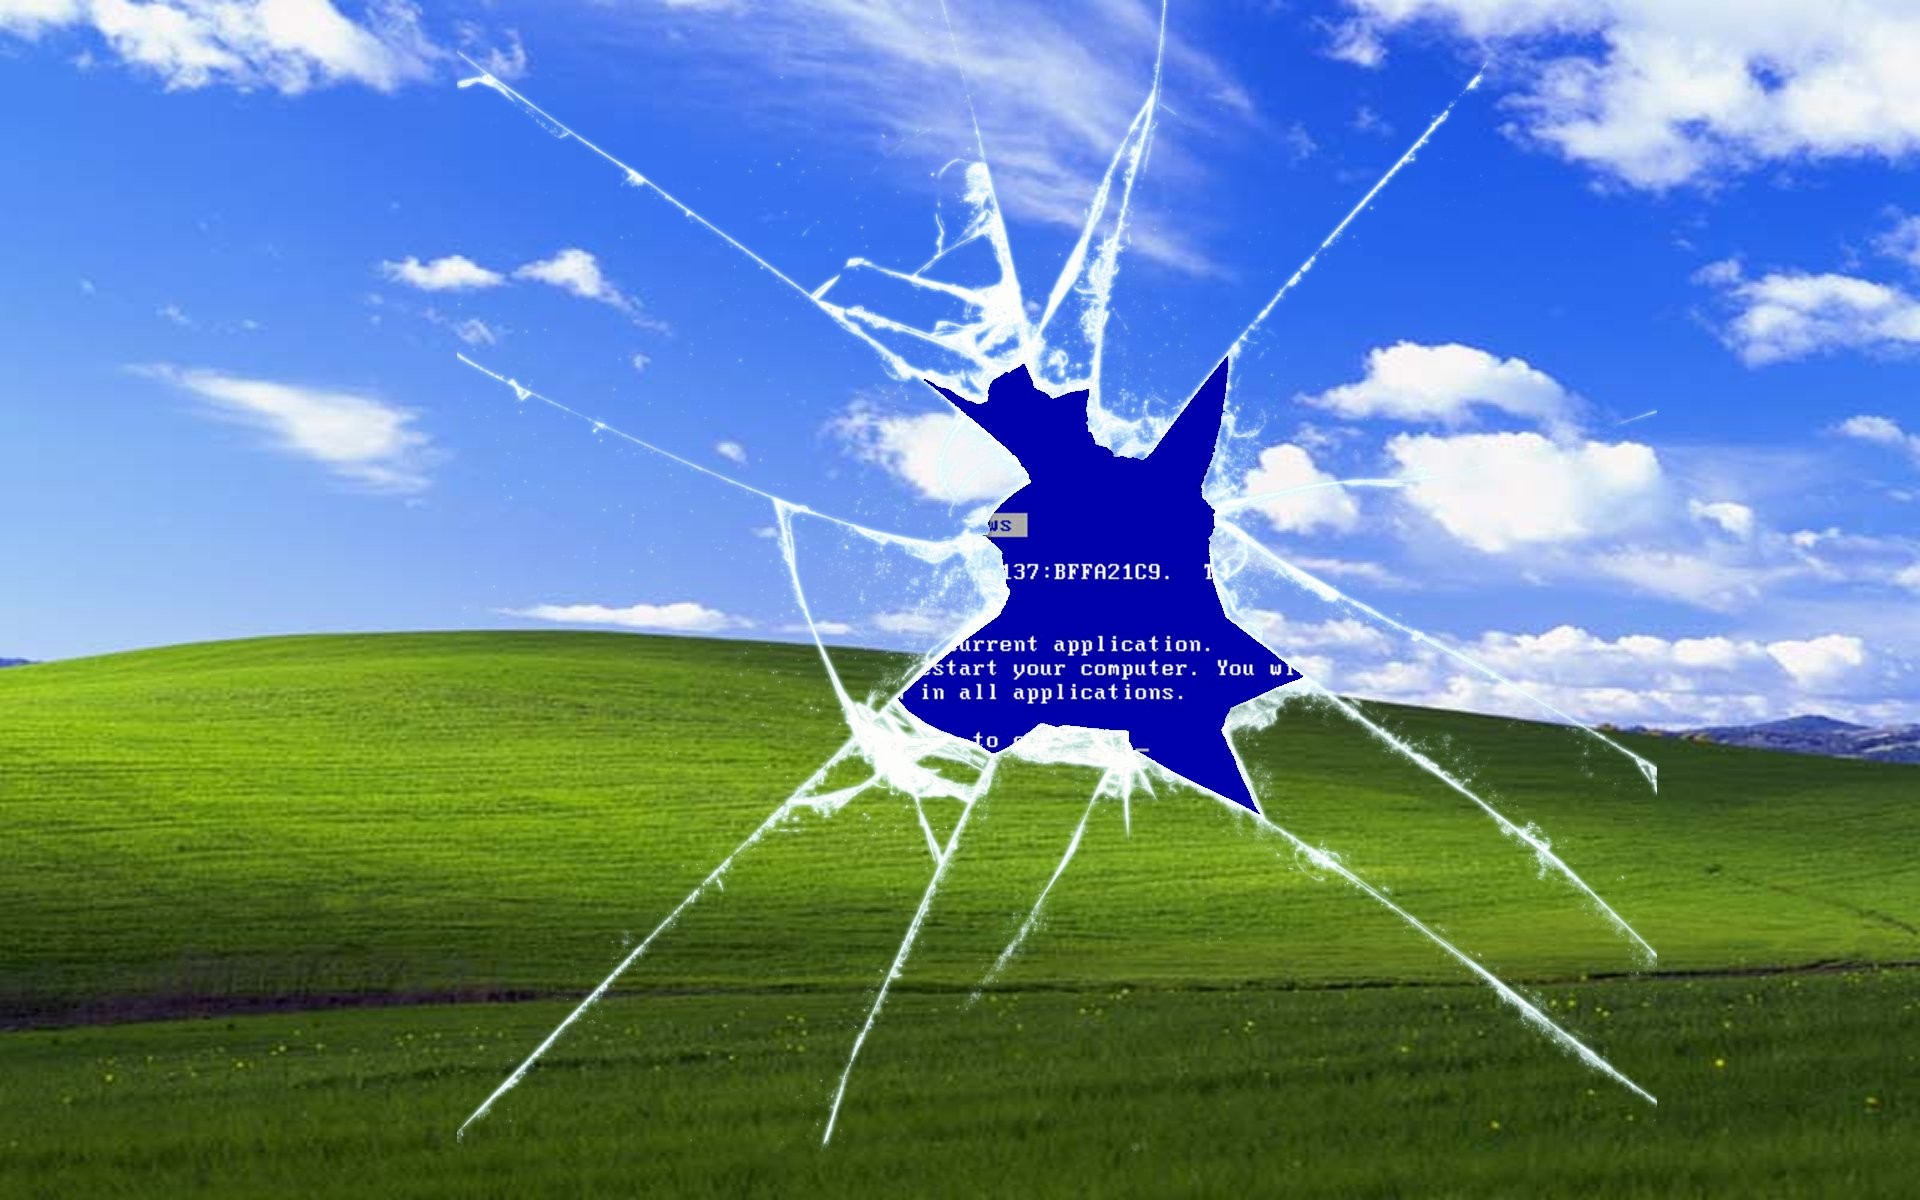 Windows XP wallpaper ·① Download free amazing backgrounds for desktop